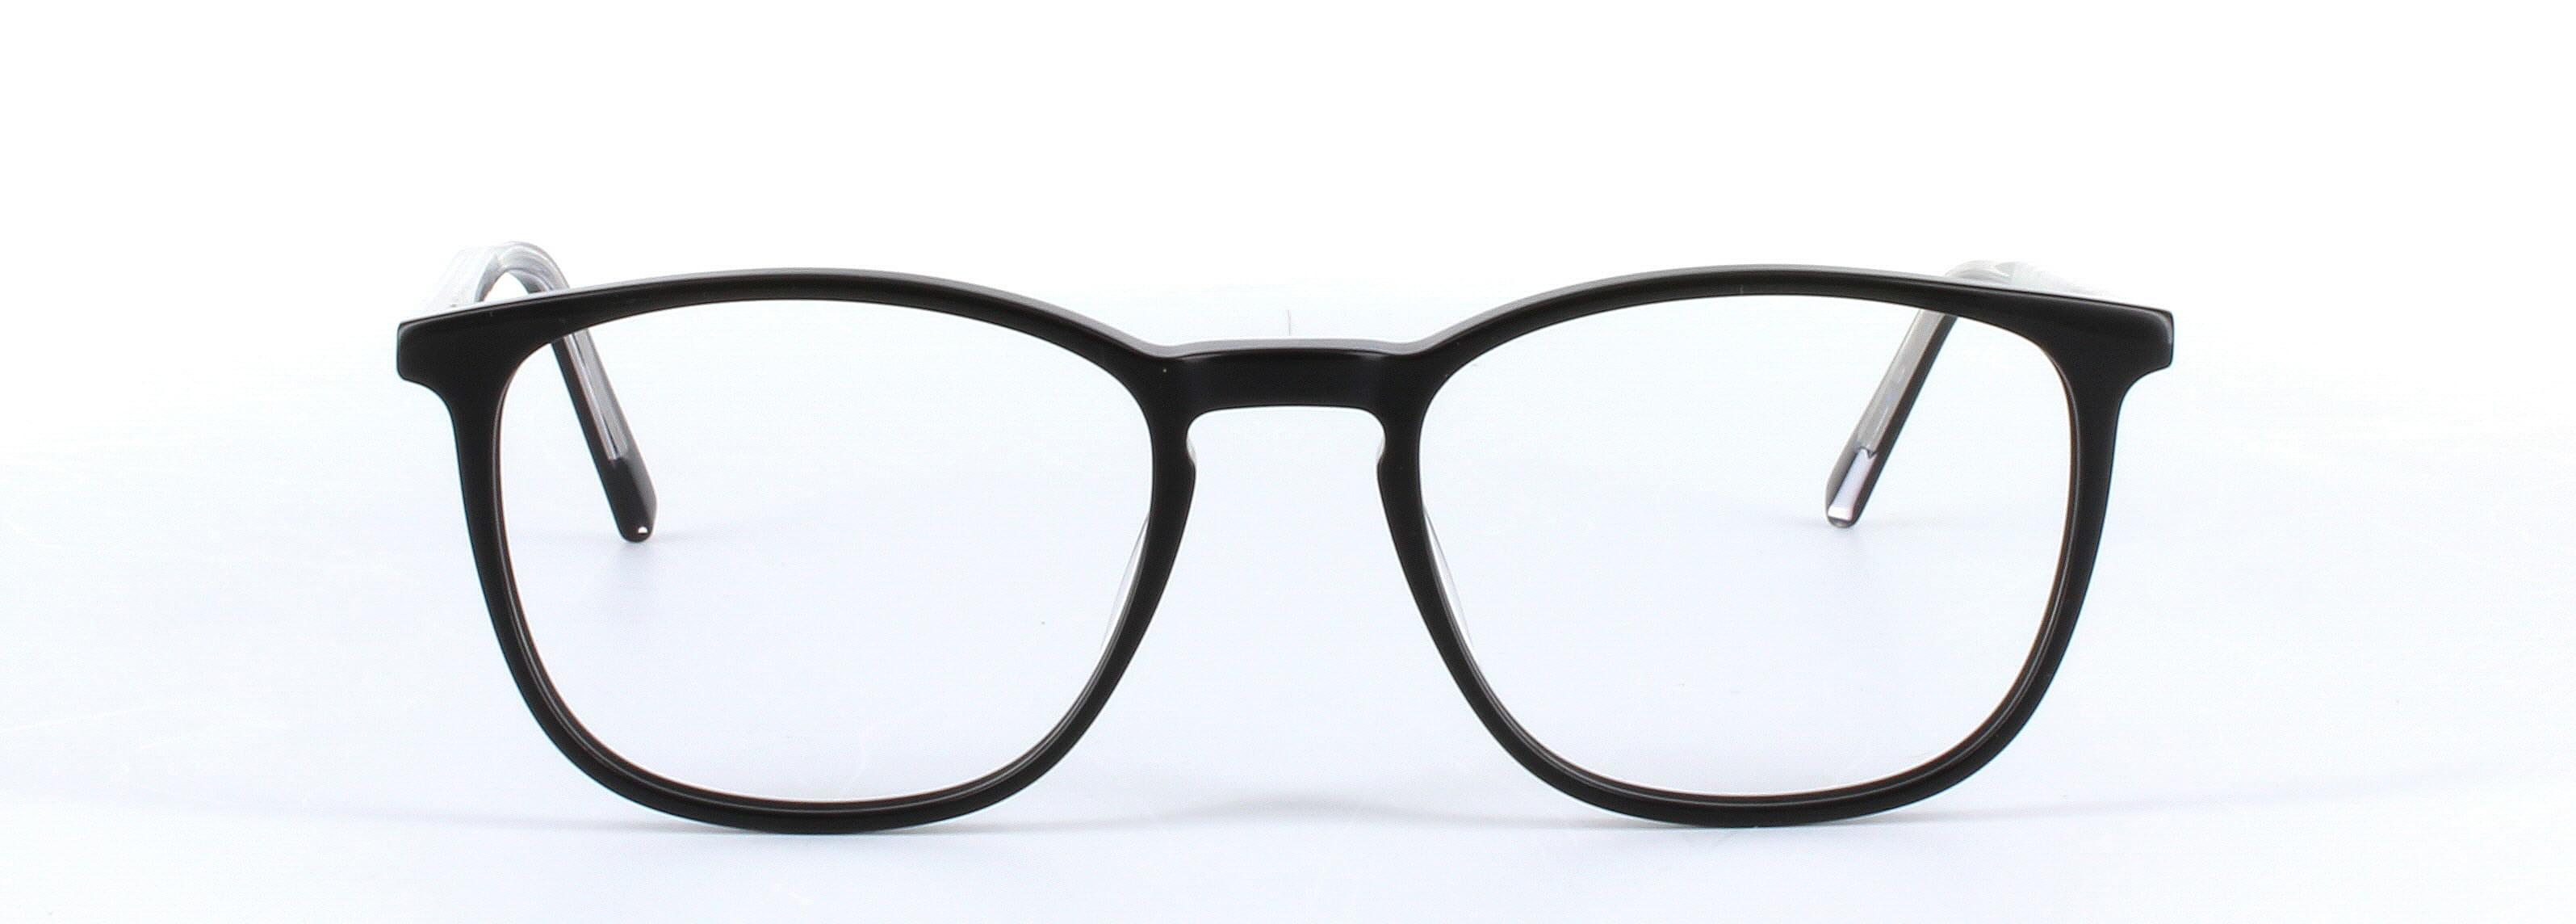 Mariana Black Full Rim Round Plastic Glasses - Image View 5